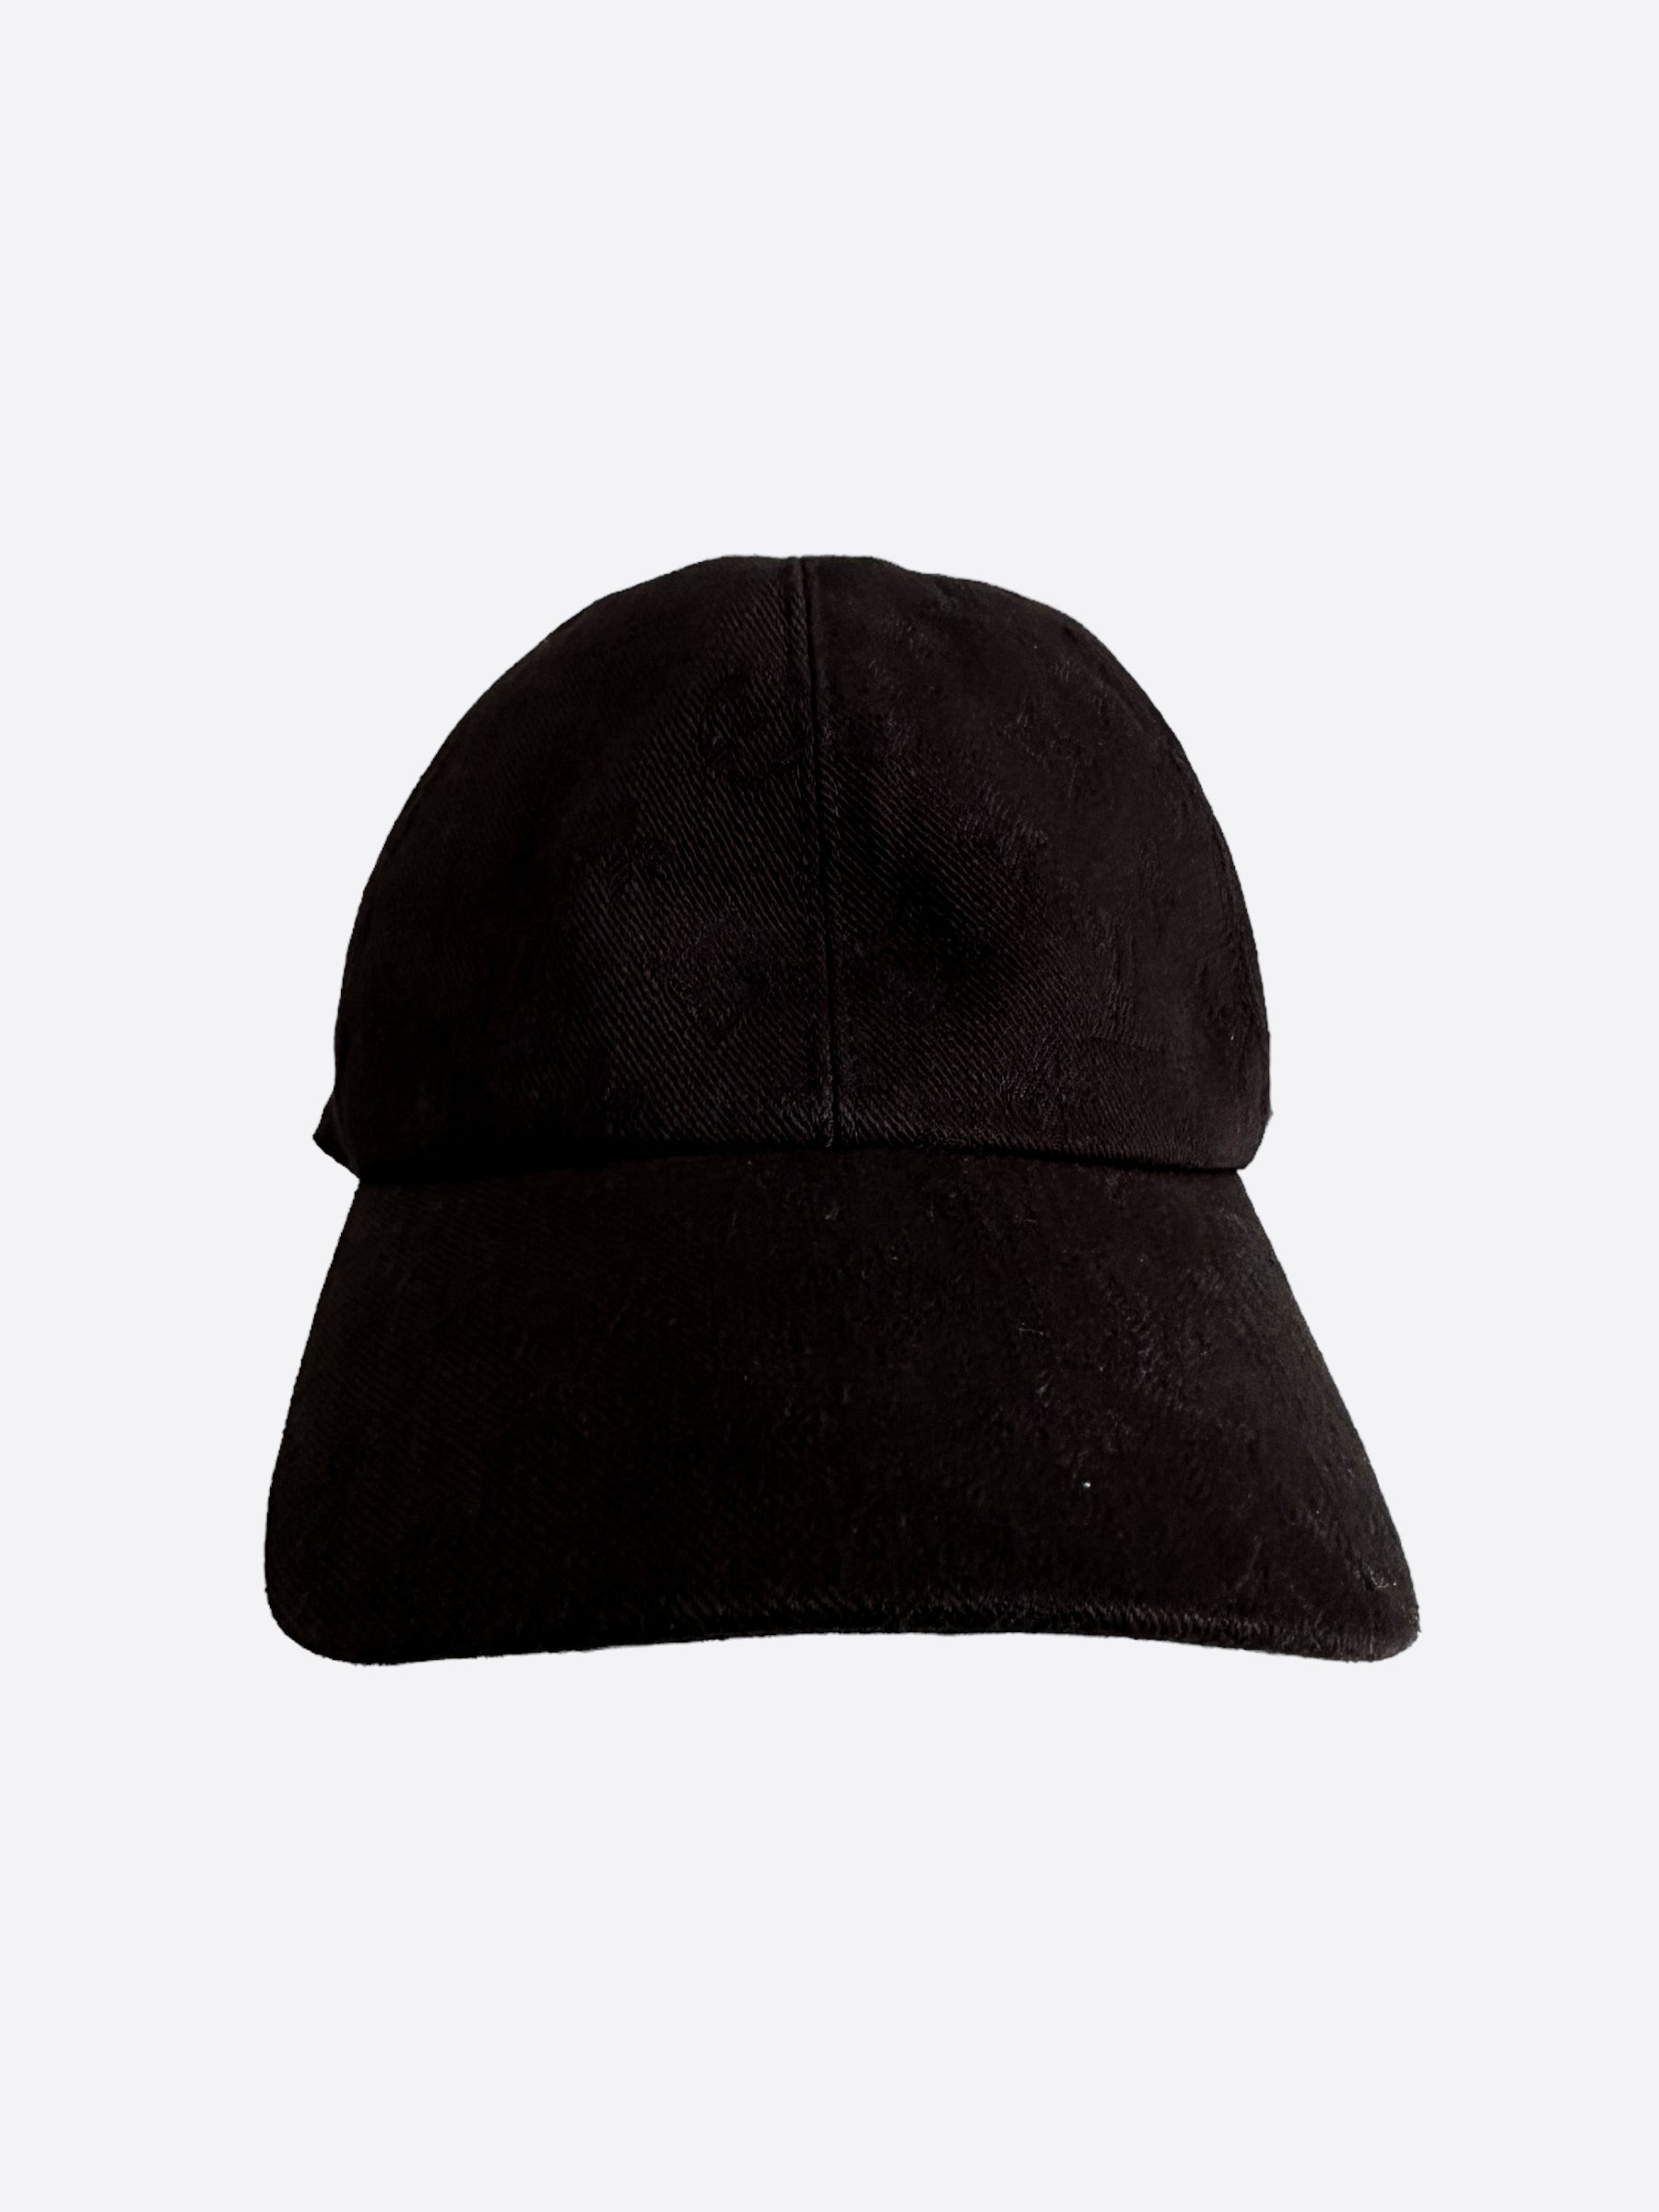 Louis Vuitton Monogram My Essential Cap, Black, L * Stock Confirmation Required